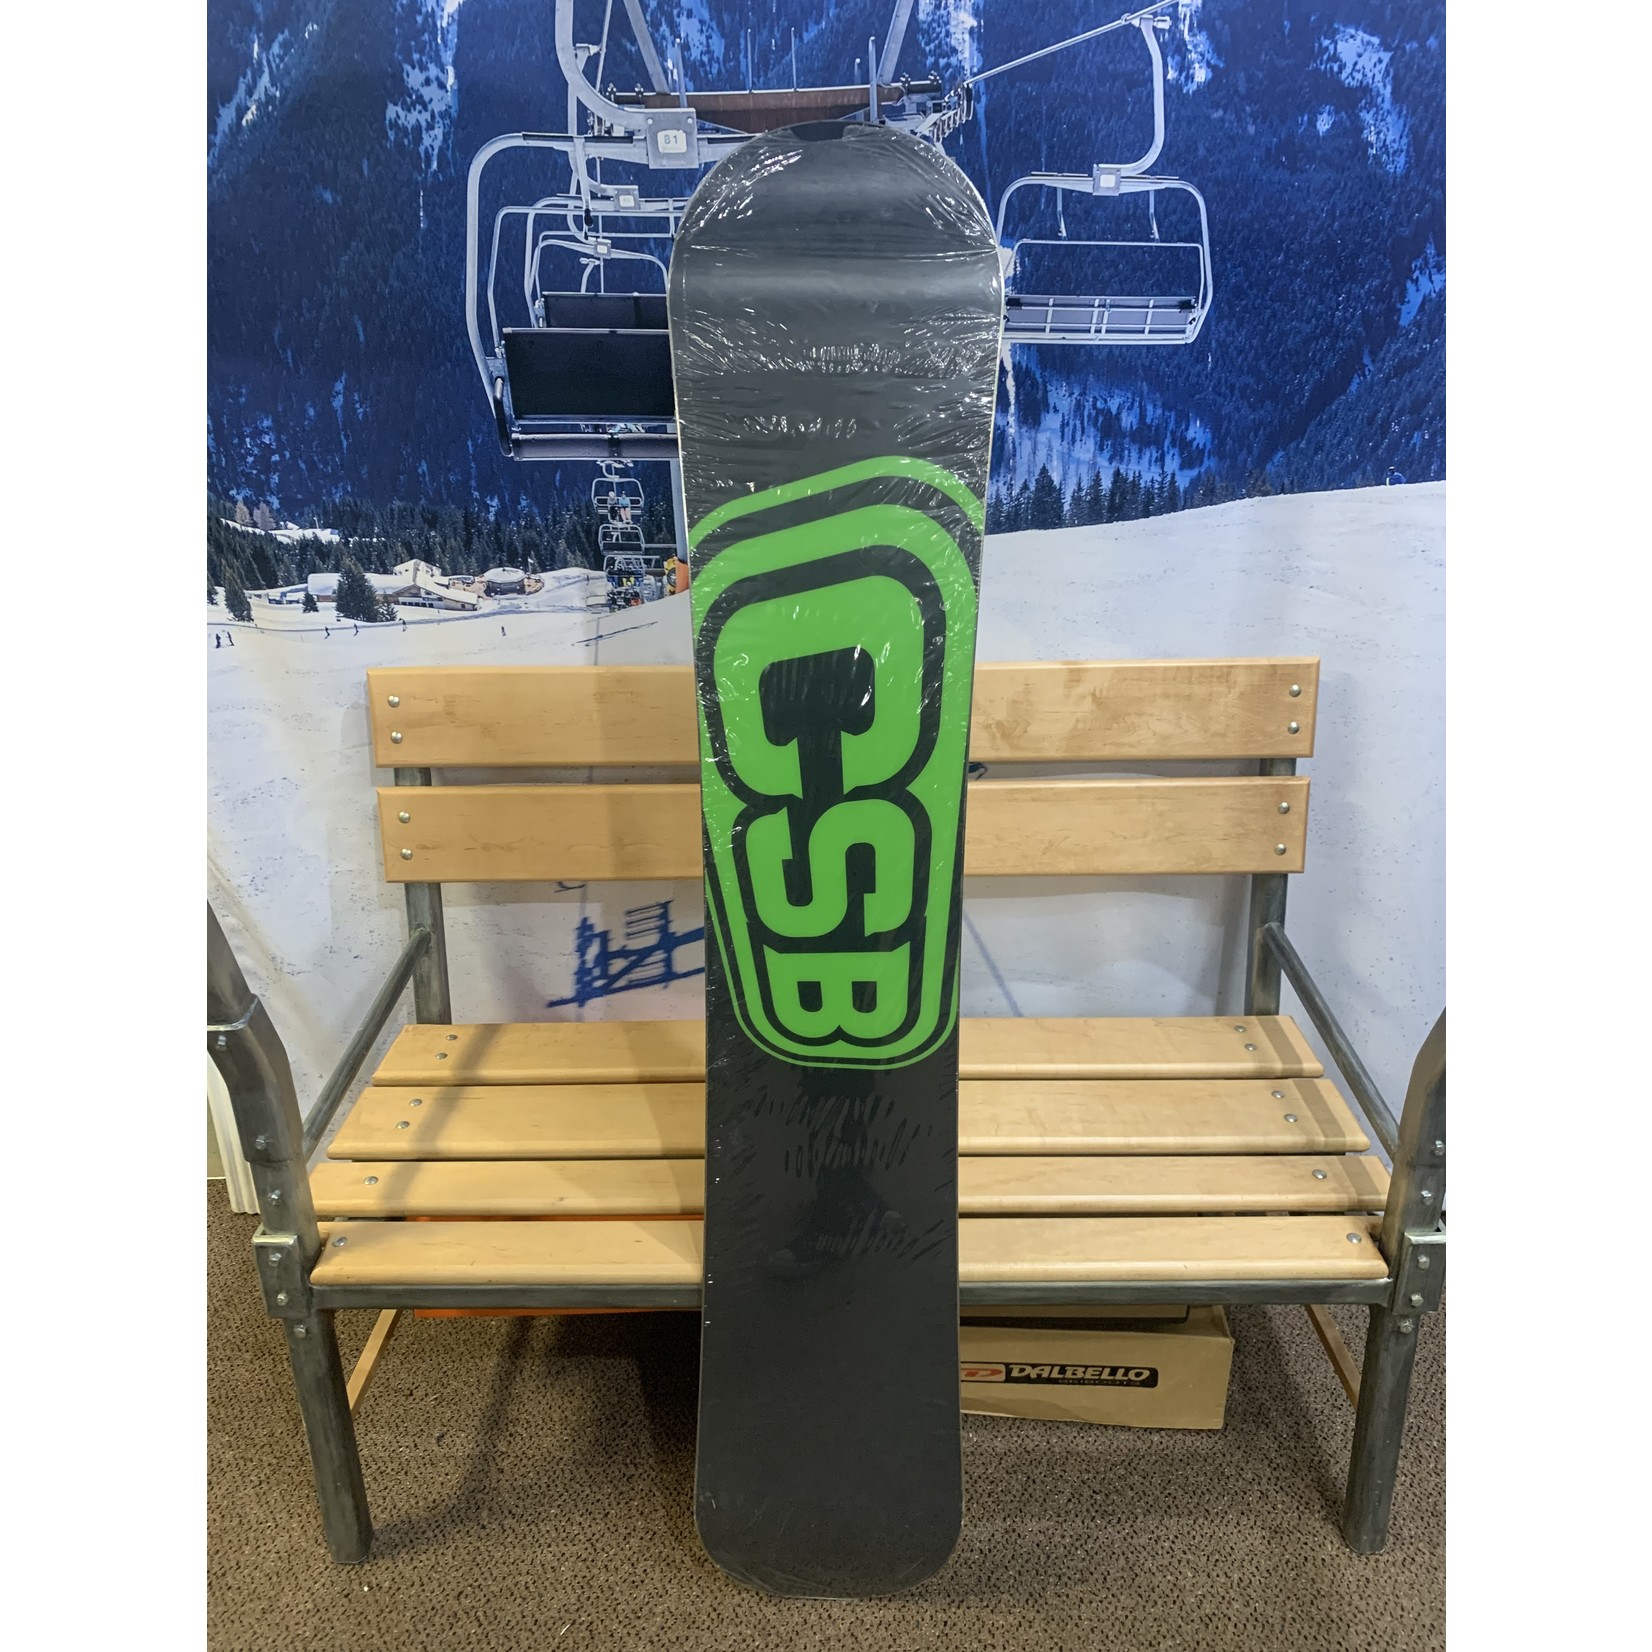 NEW Men's CSB Snowboard (White/Green) 154 cm